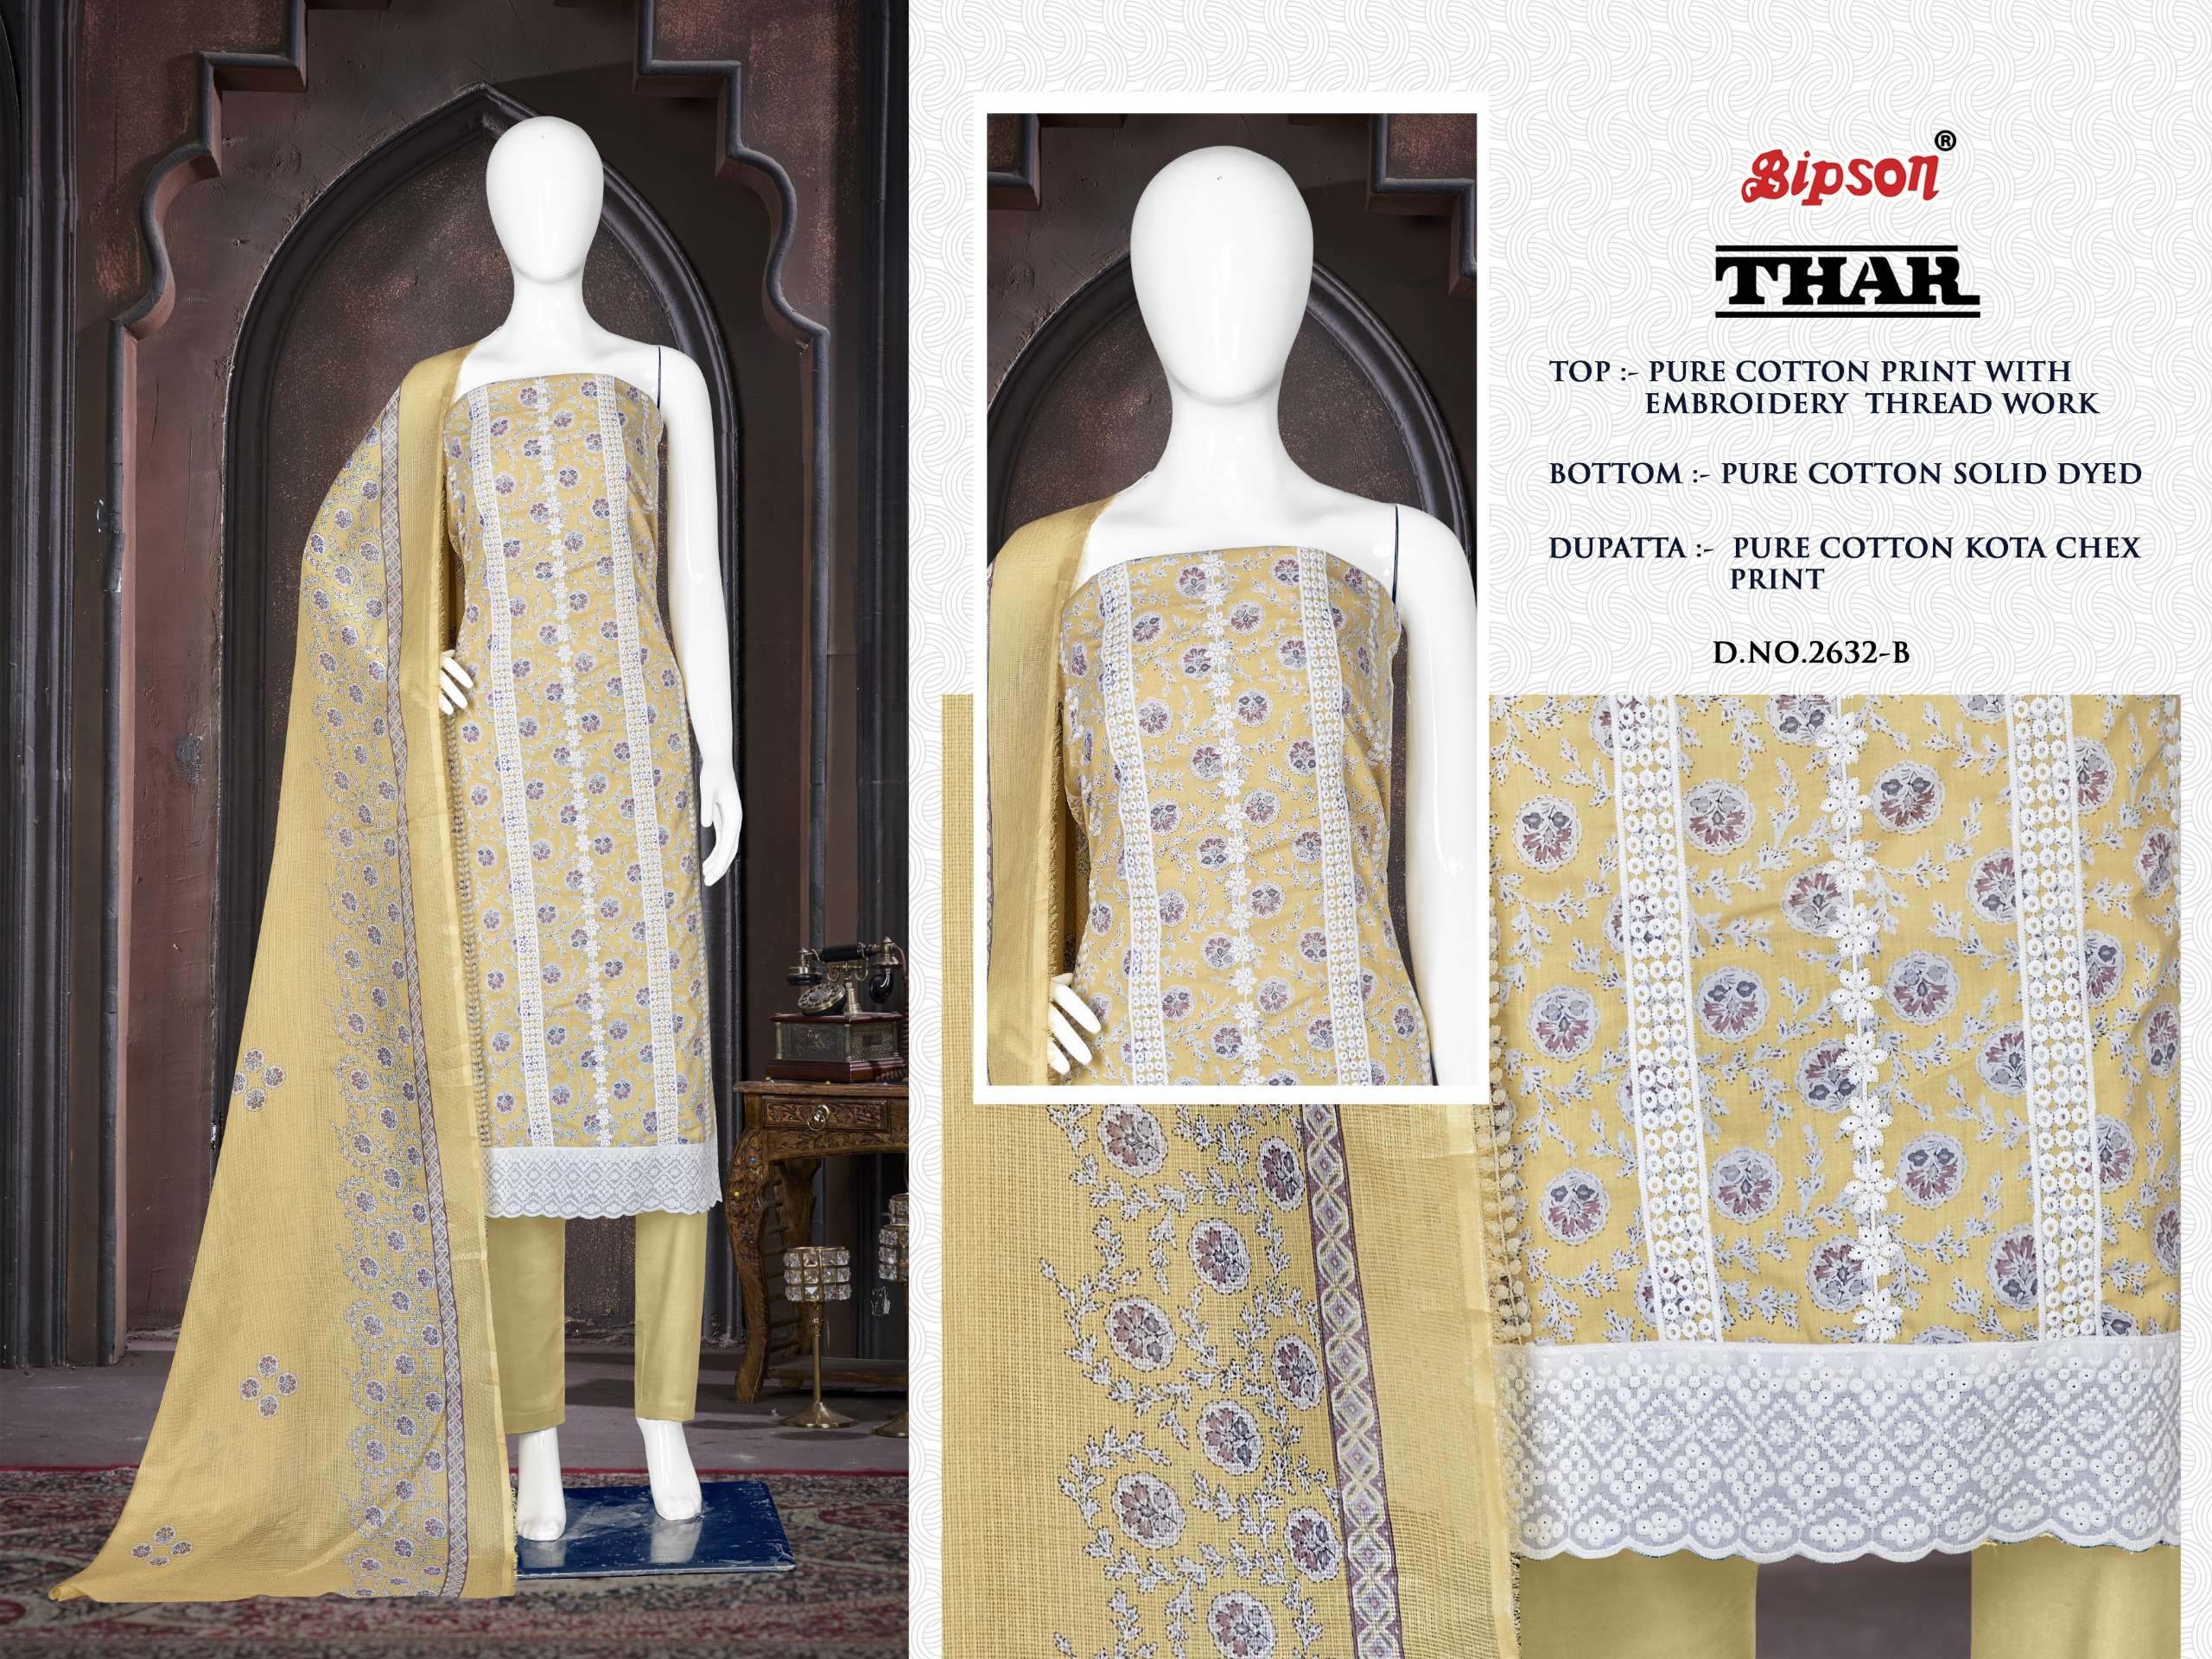 bipson thar 2632  cotton regal look salwar suit catalog